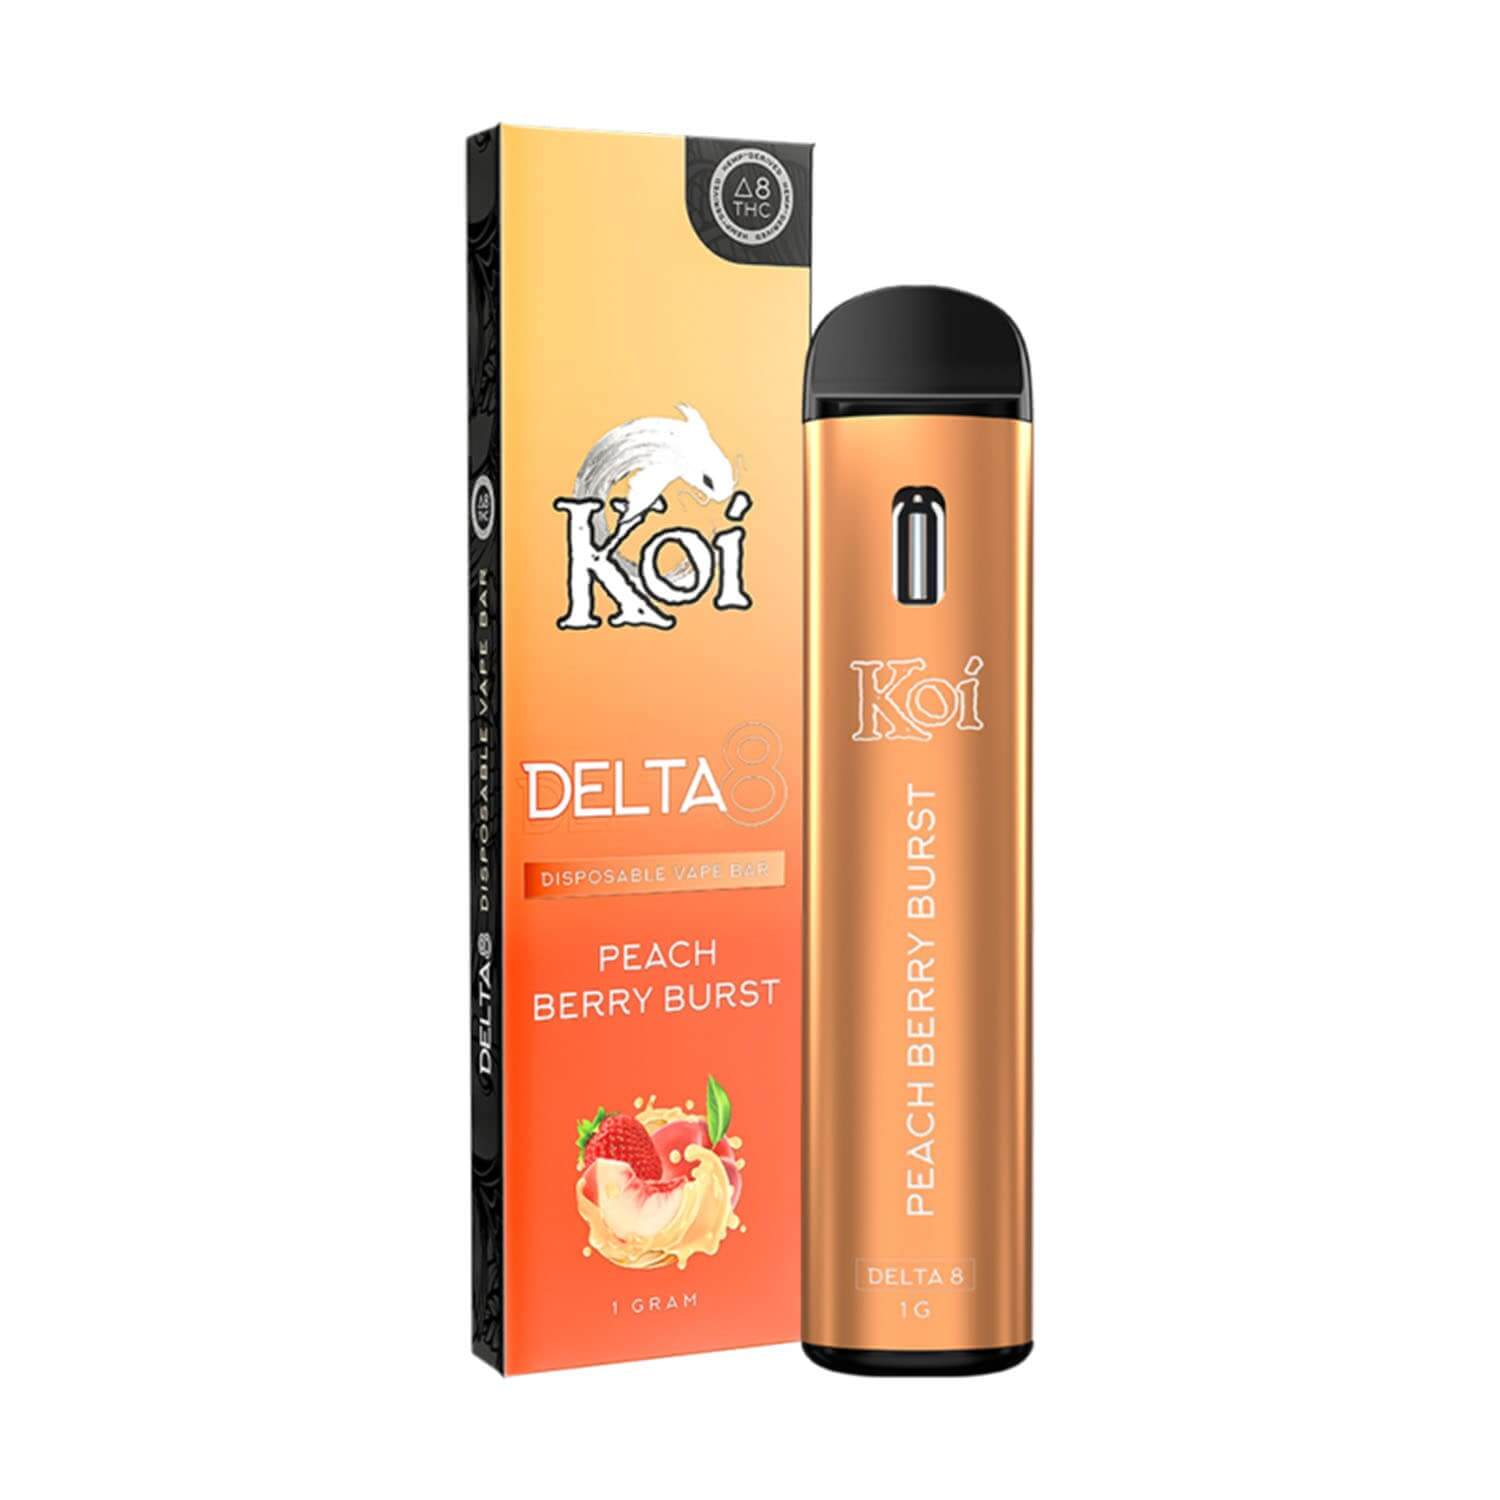 Koi Peach Berry Burst Delta 8 Disposable Vape Bar (1g) Best Price